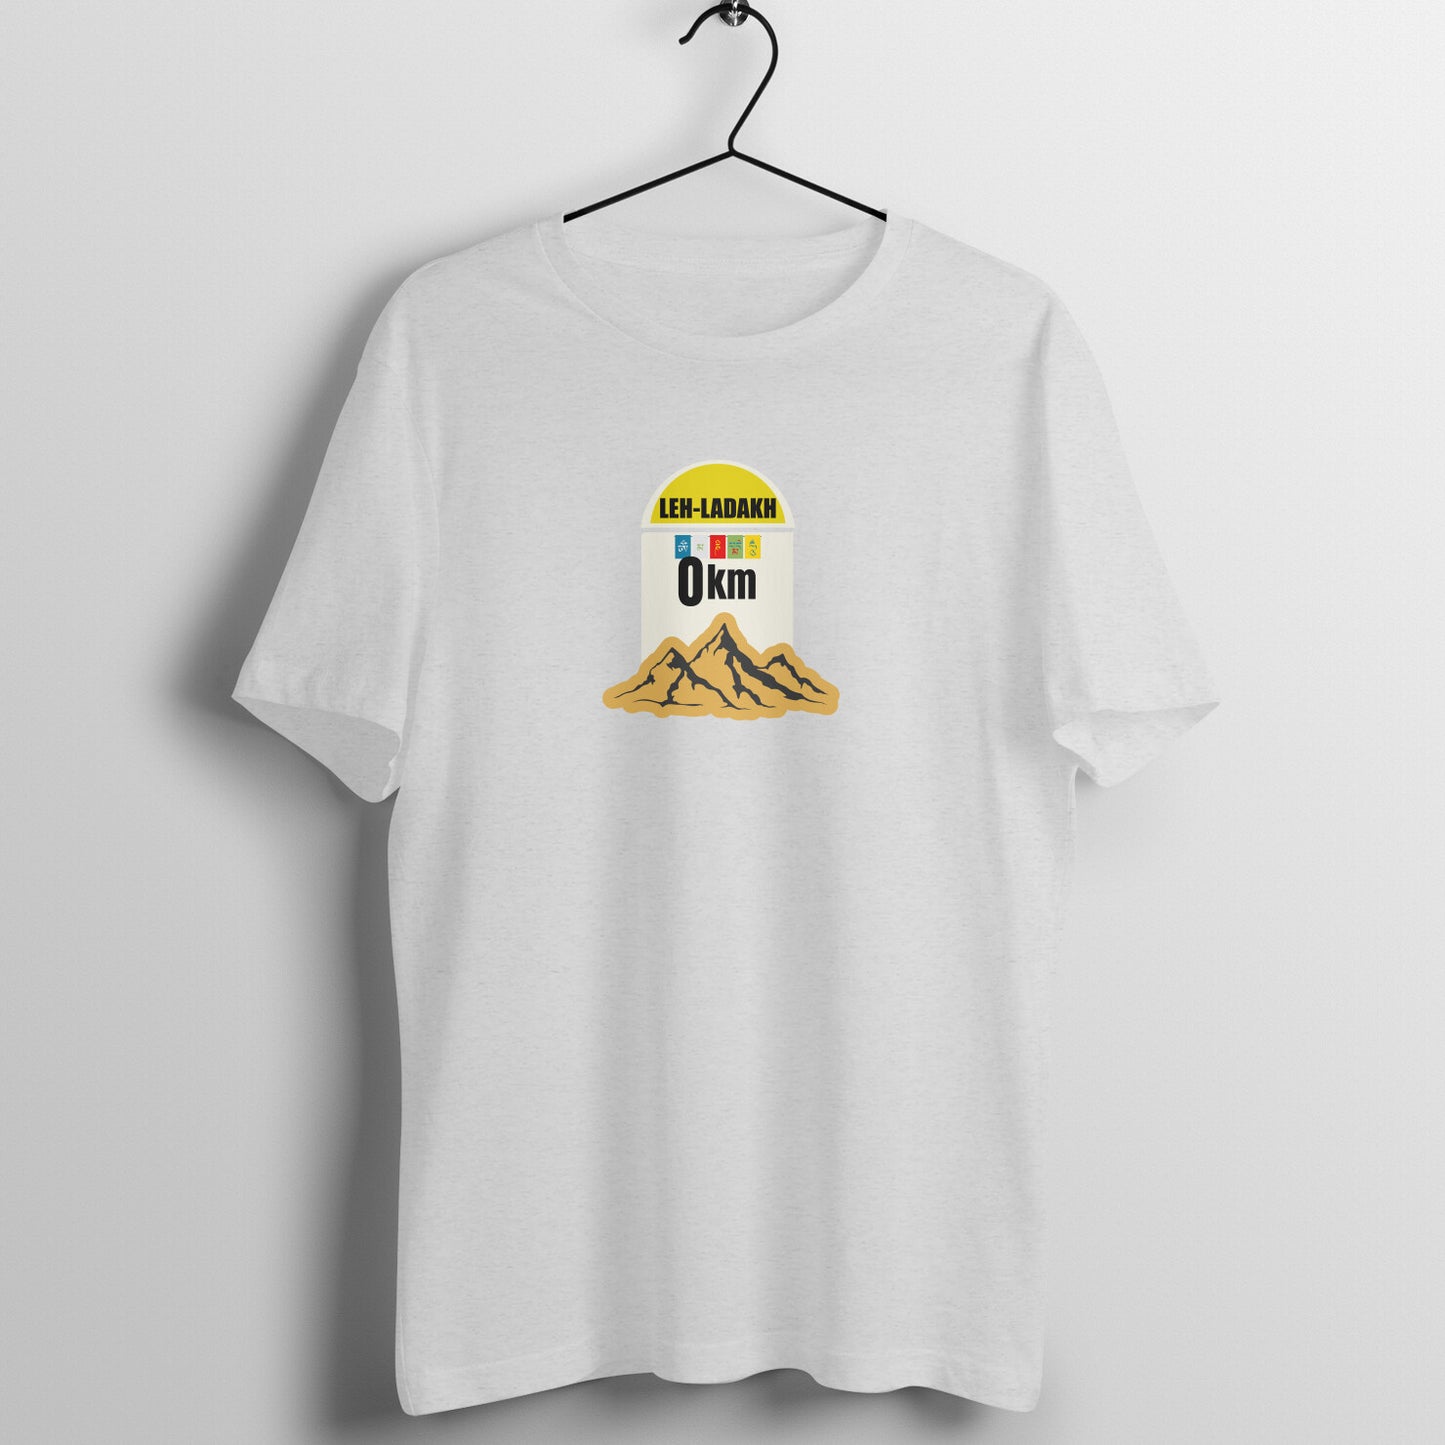 Leh-ladakh - Unisex T shirt - Start your dream tour with our collection